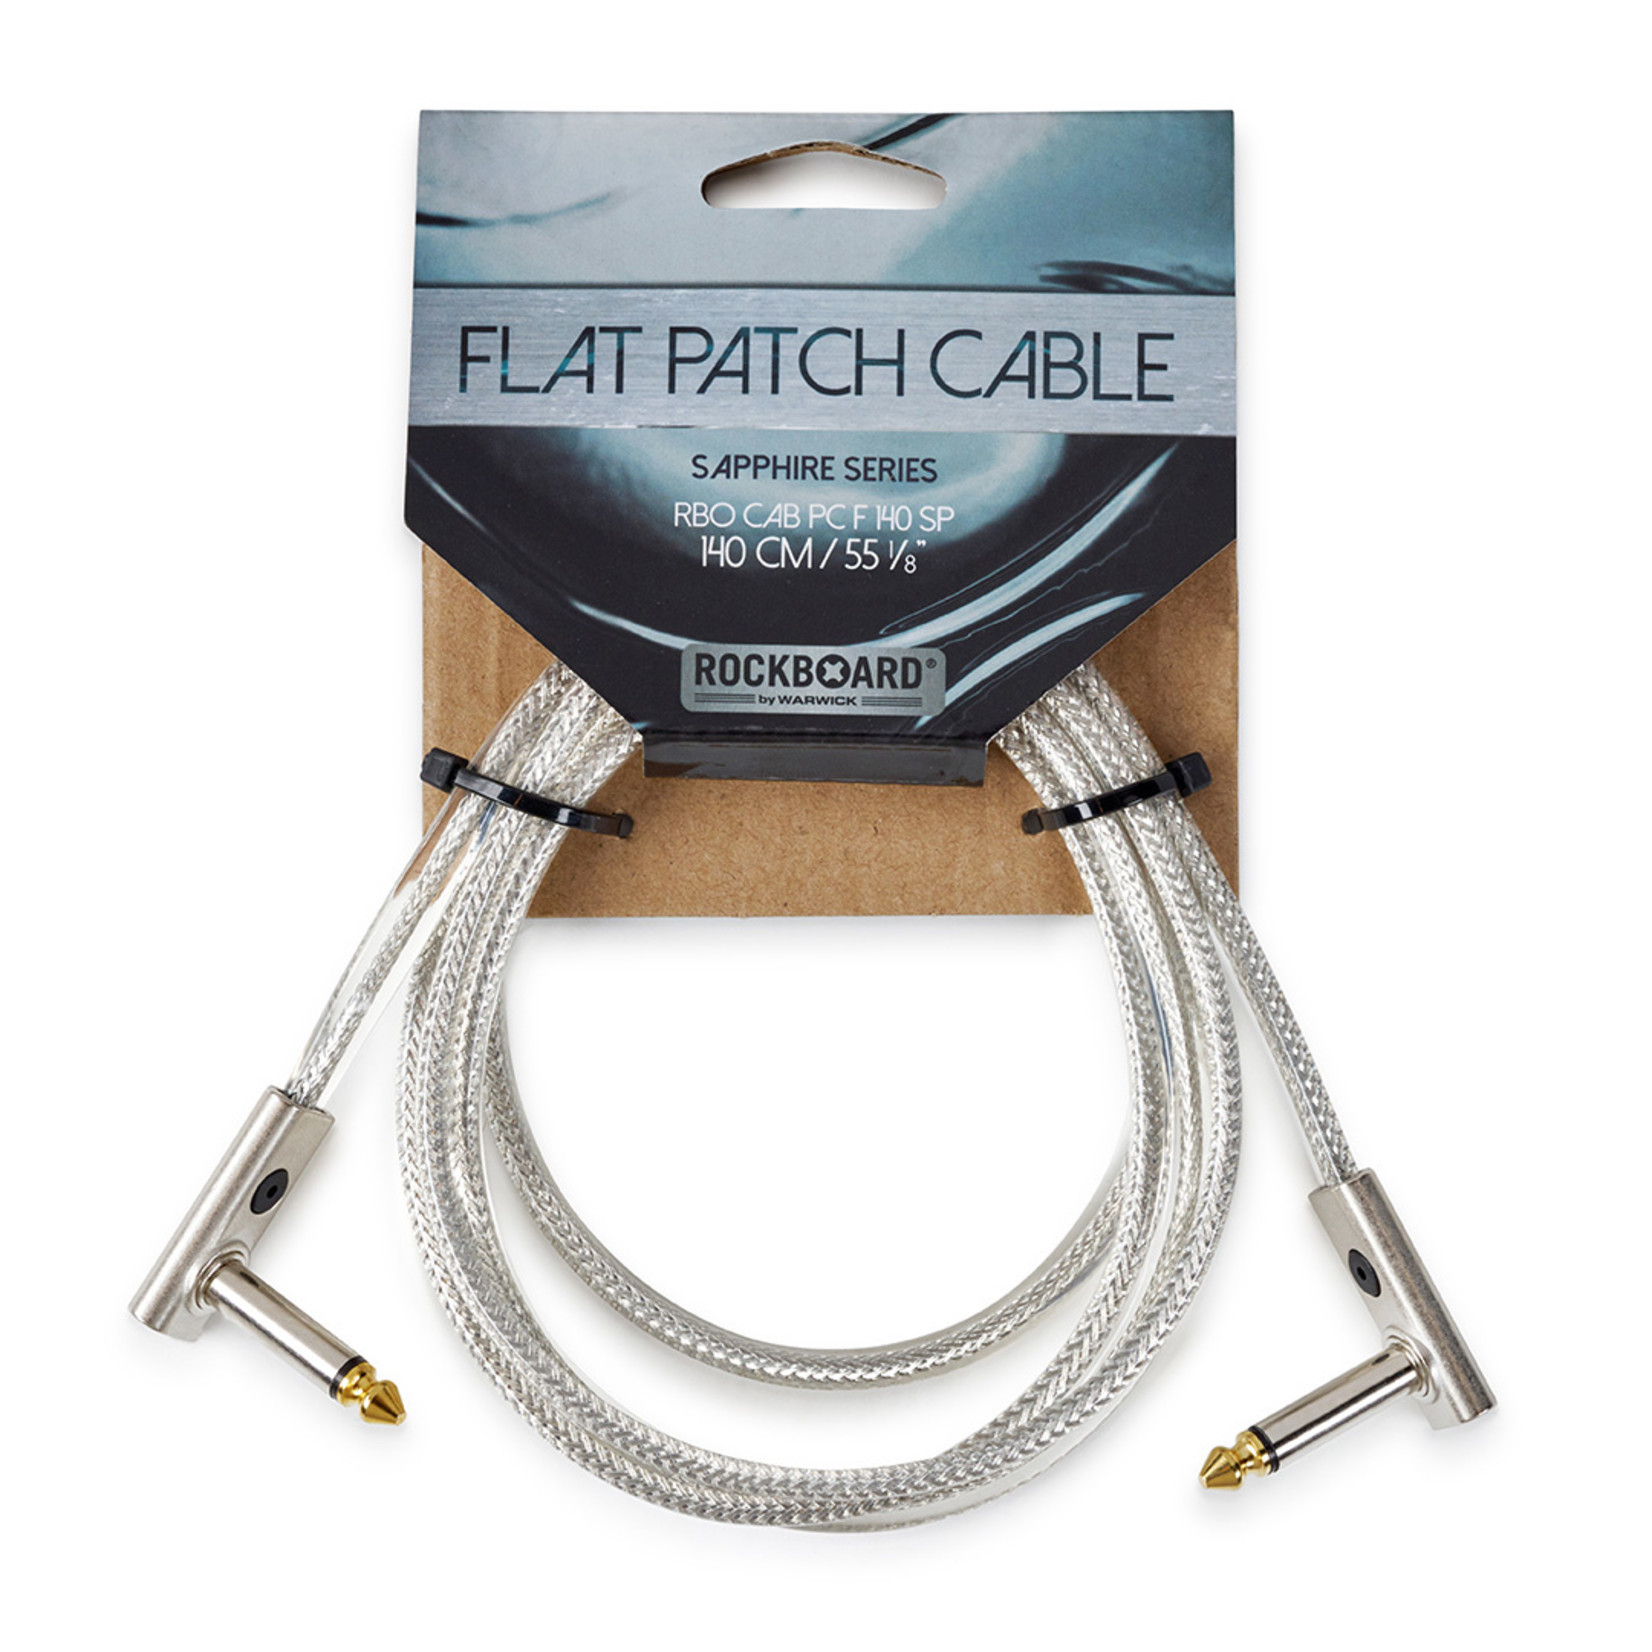 Rockboard RockBoard Flat Patch Cable Sapphire Series - 140 cm / 55 1/8"